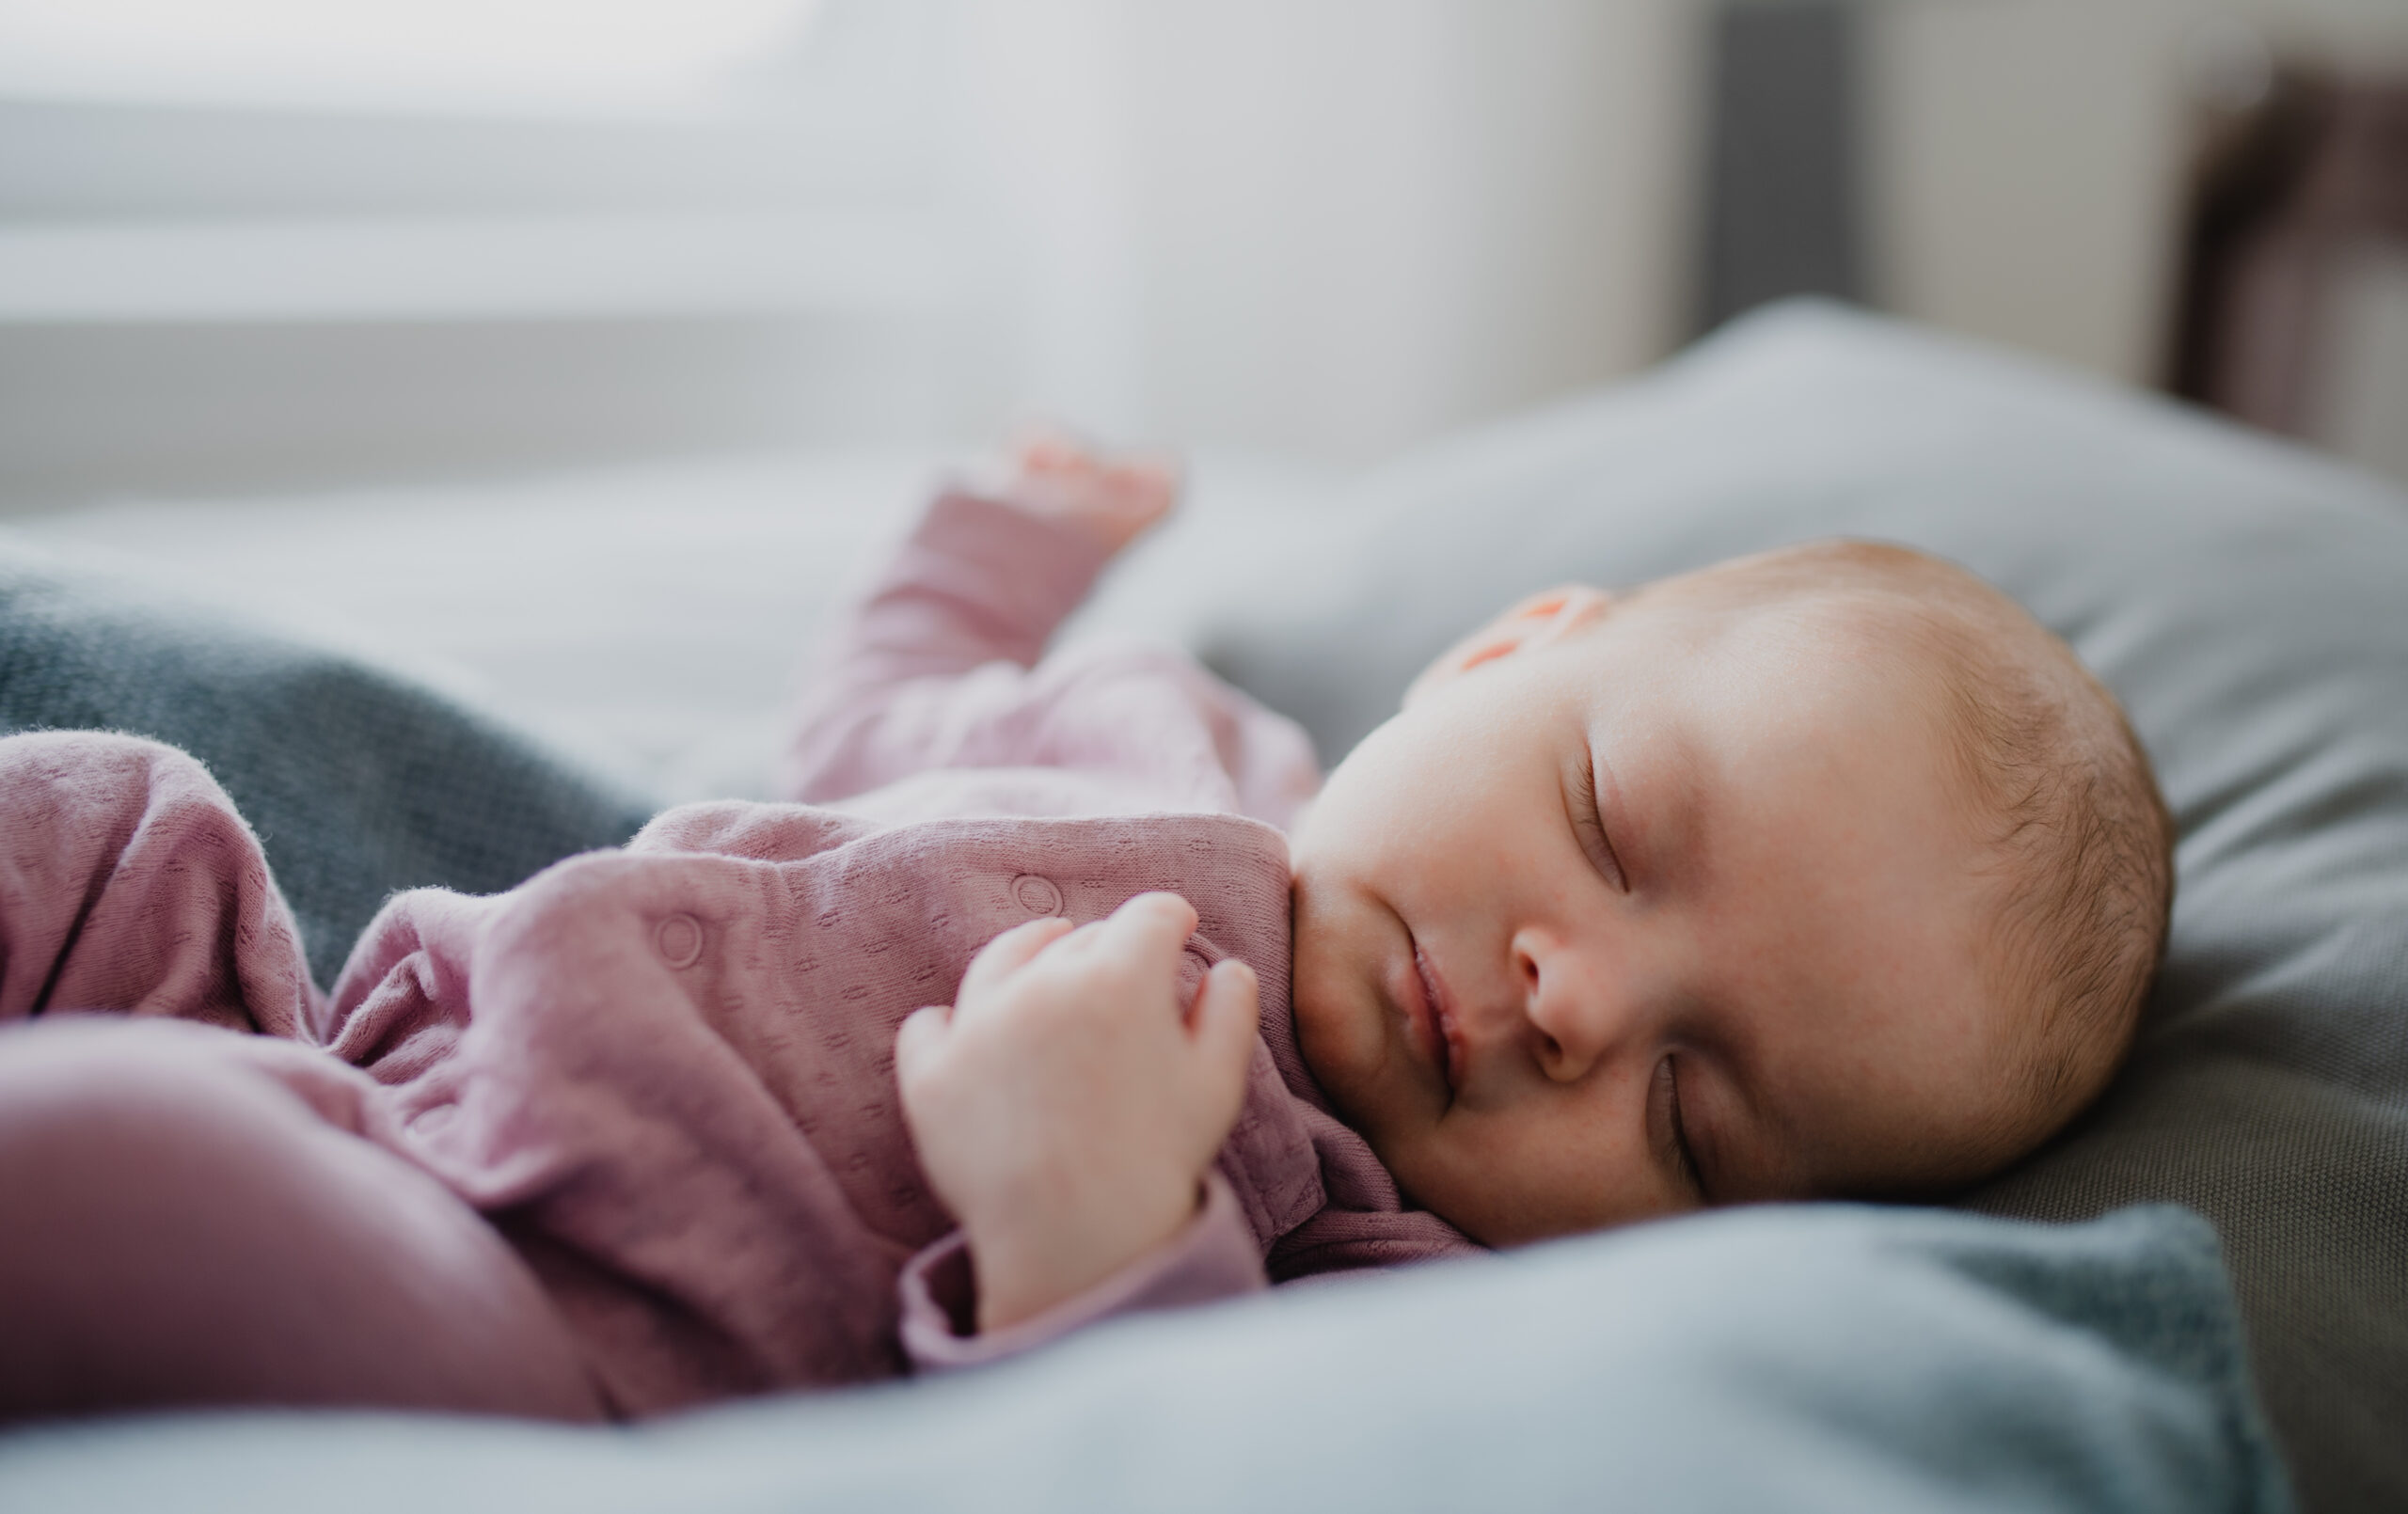 Portrait of cute newborn baby girl, sleeping an lying on sofa indoors at home.